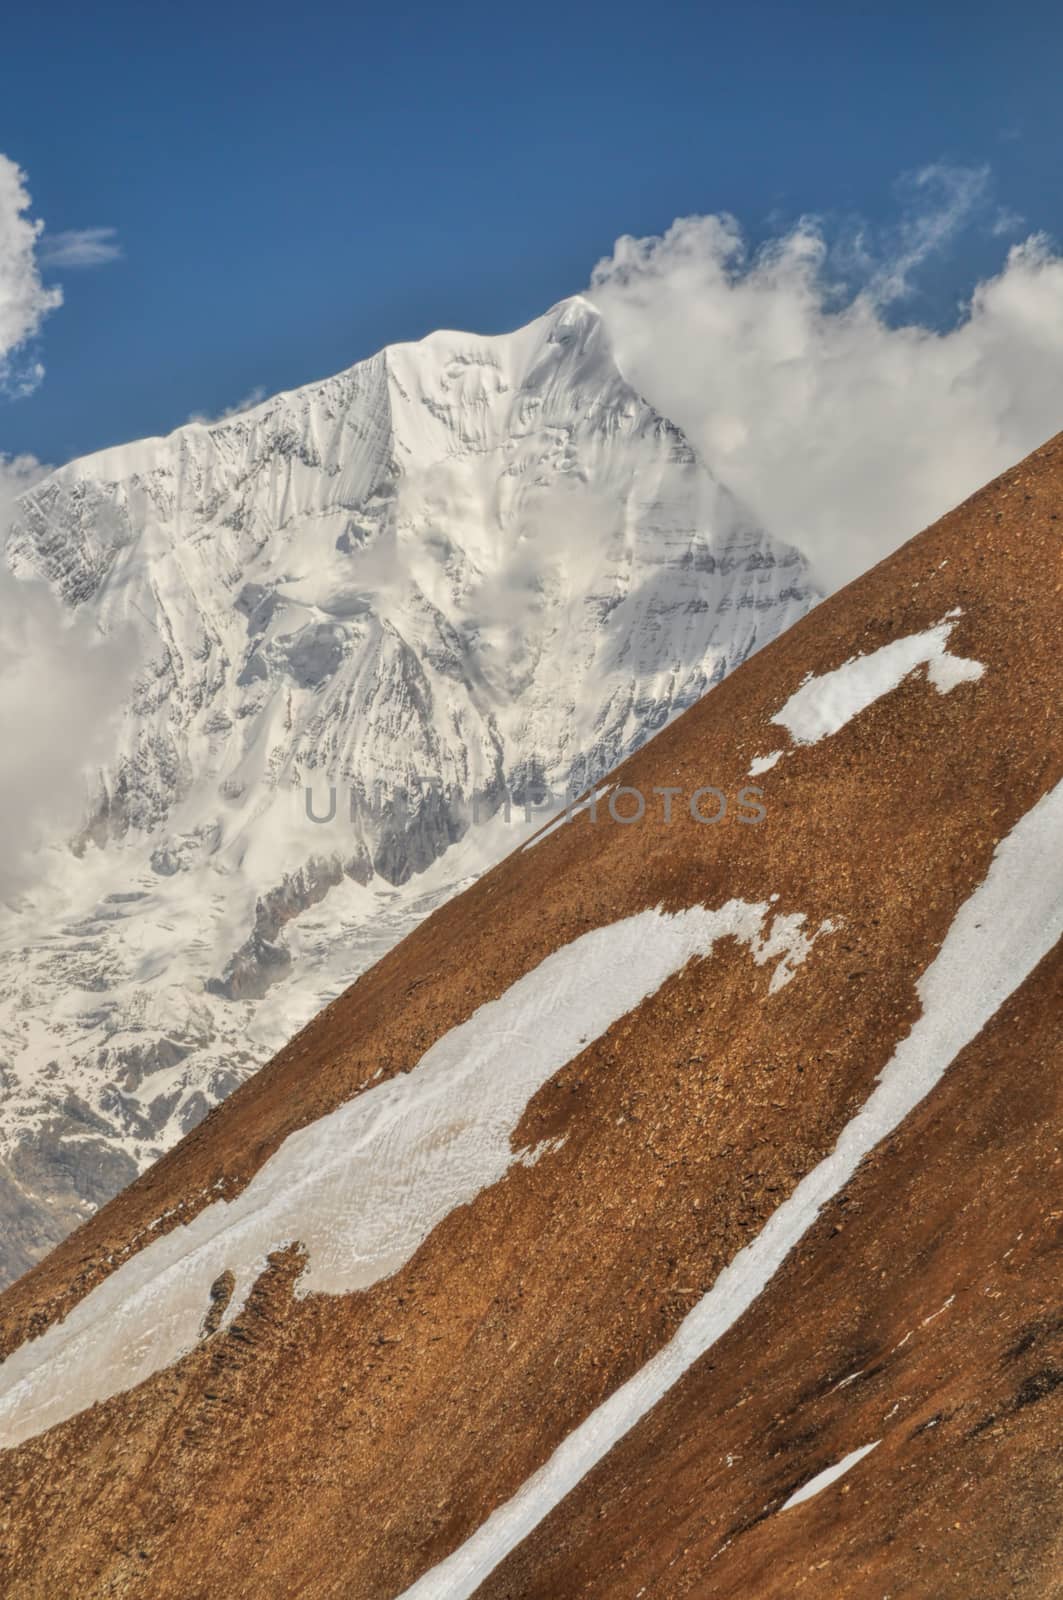 Slope in Himalayas by MichalKnitl